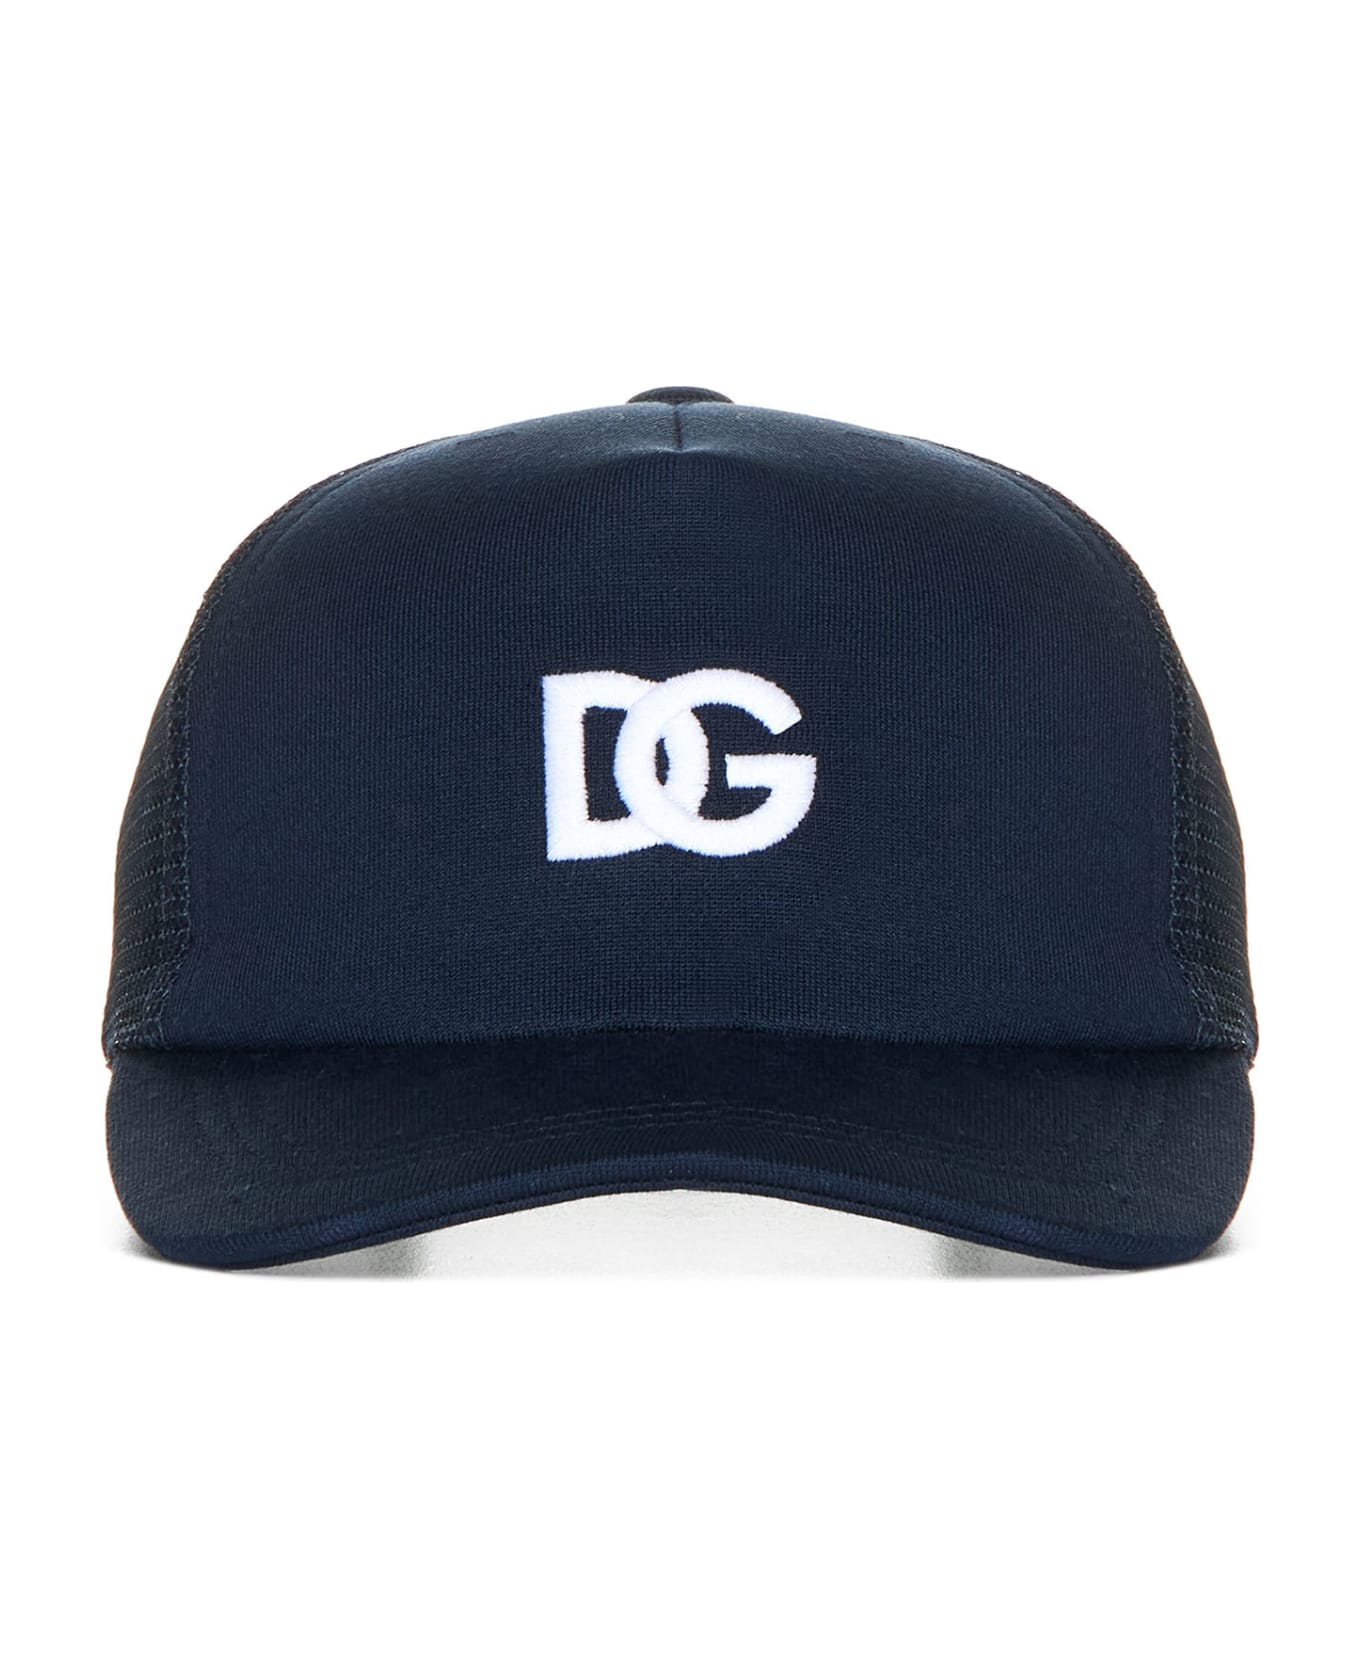 Dolce & Gabbana Hat - Blu scurissimo 1